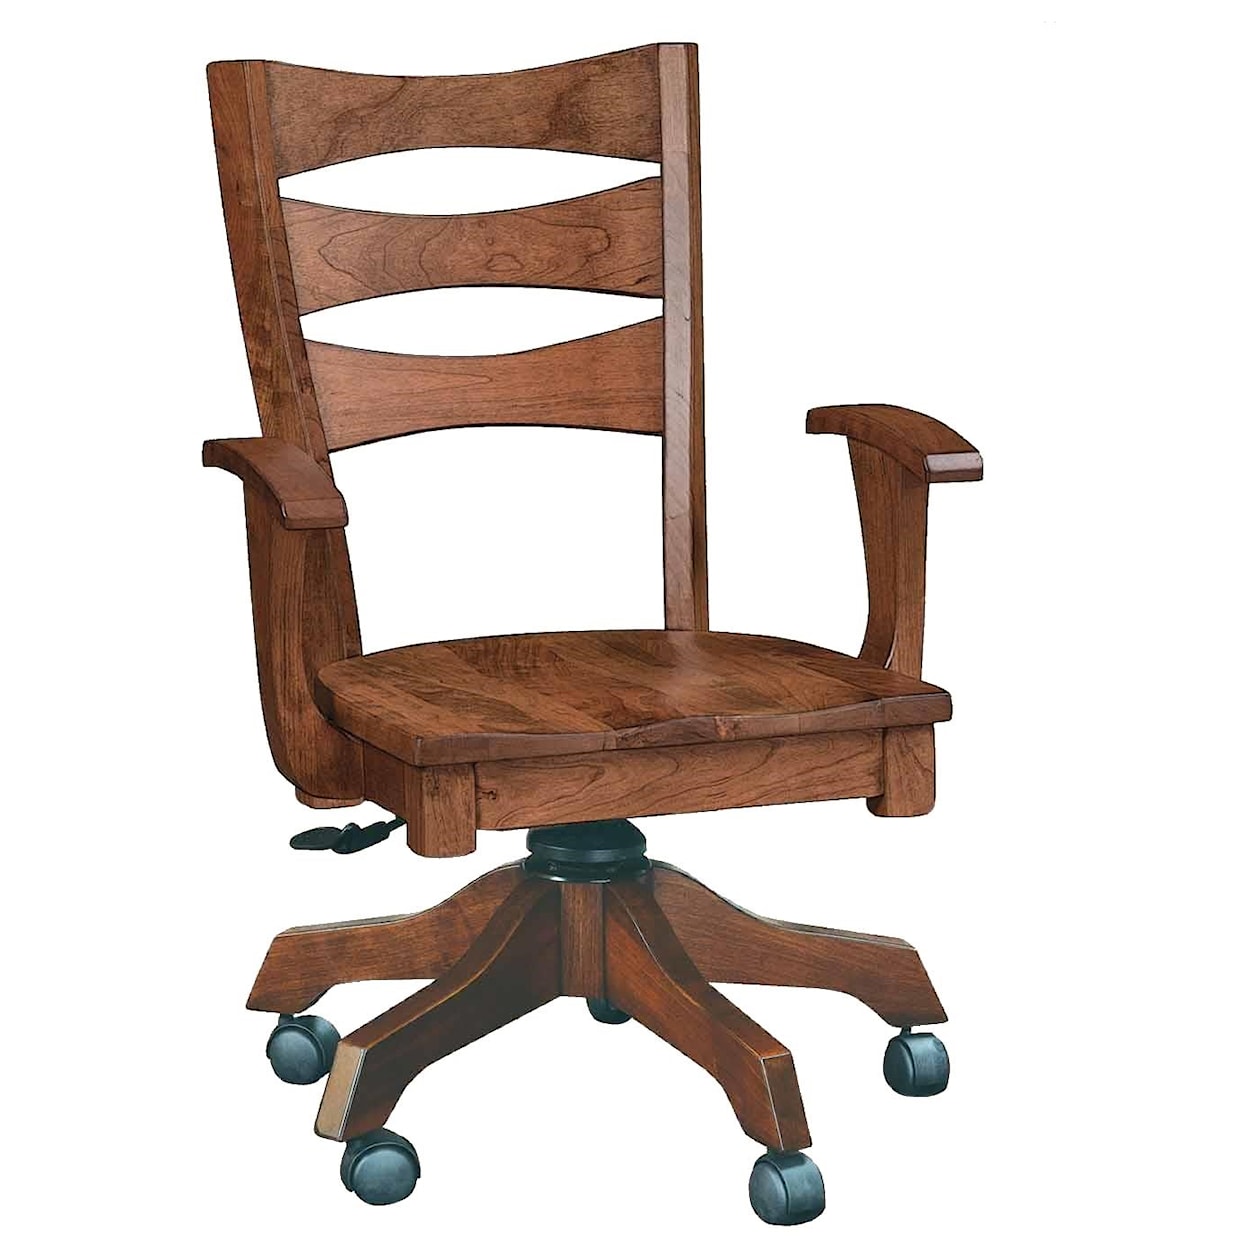 Wengerd Wood Products Sierra Desk Chair